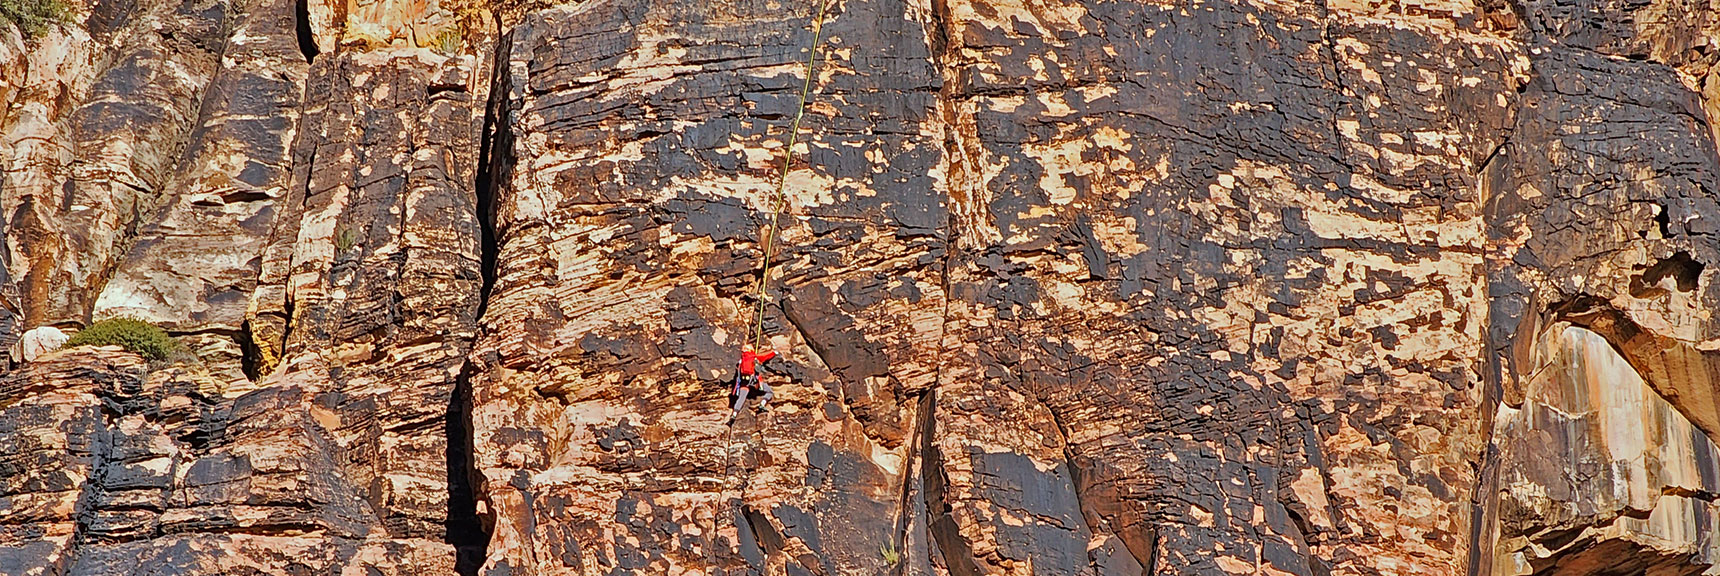 Rock Climber Ascending Mescalito Pyramid Vertical Cliffs. | Rock Climber Observations | Pine Creek Canyon | Rainbow Mountain Wilderness, Nevada